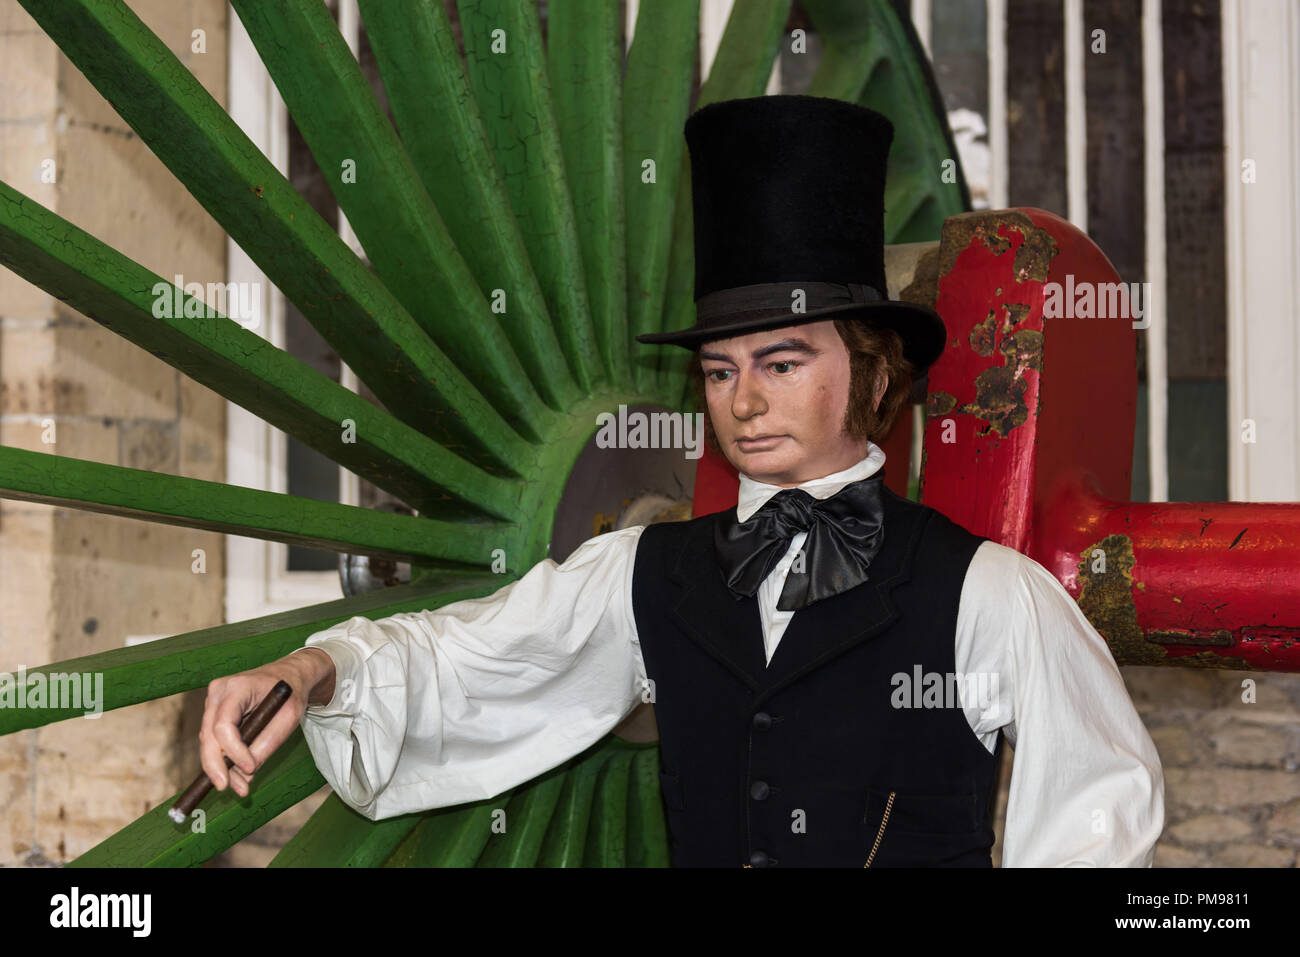 Brunel at STEAM, Great Western Railway Museum, Swindon, UK Stock Photo